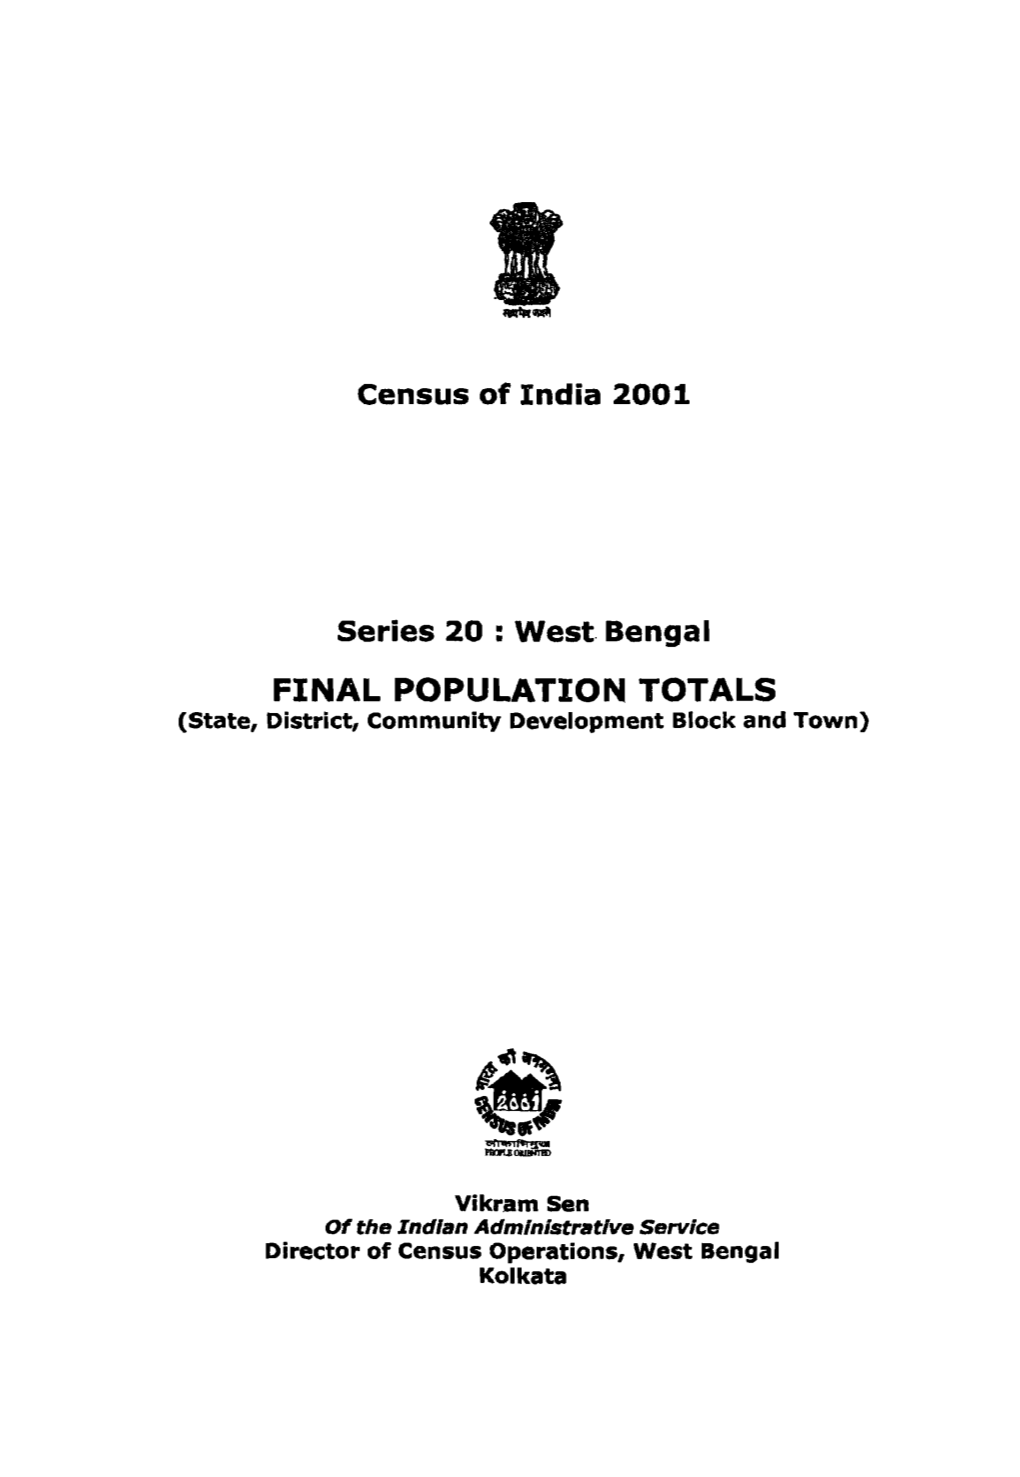 Final Population Totals, Series-20, West Bengal